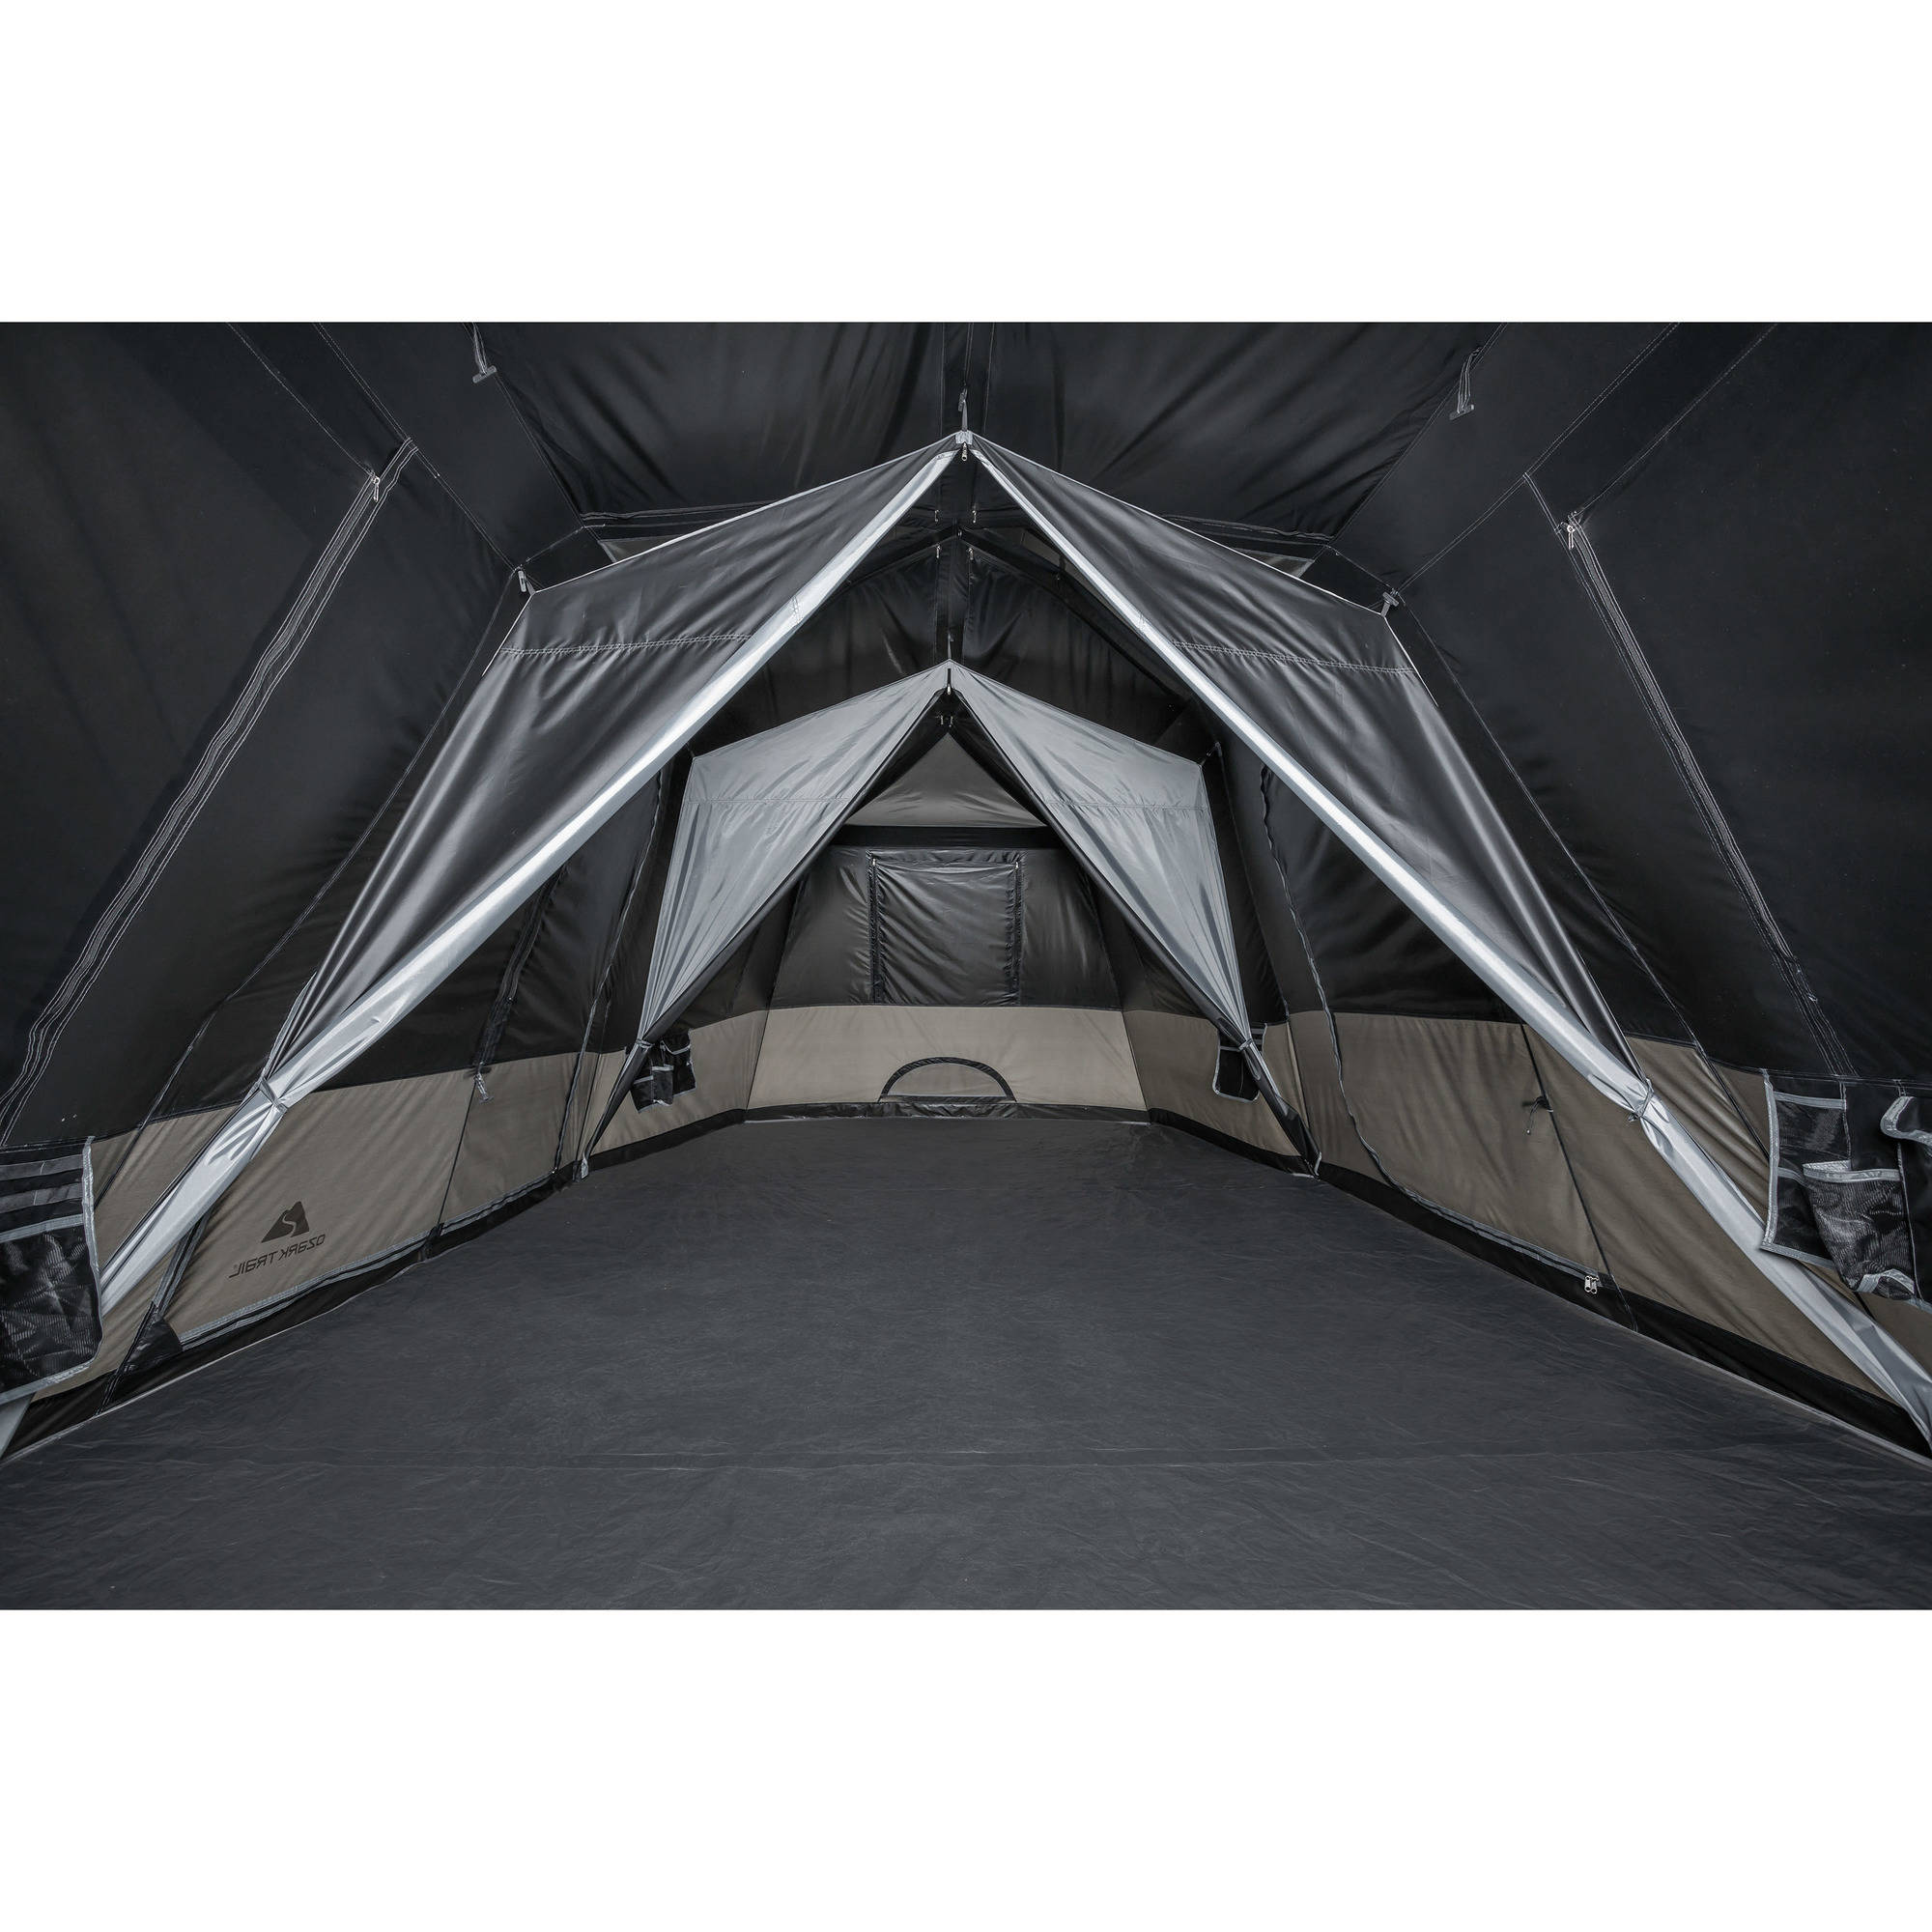 Ozark Trail 20' x 10' Dark Rest Instant Cabin Tent, Sleeps 12, 45.72 lbs - image 4 of 9